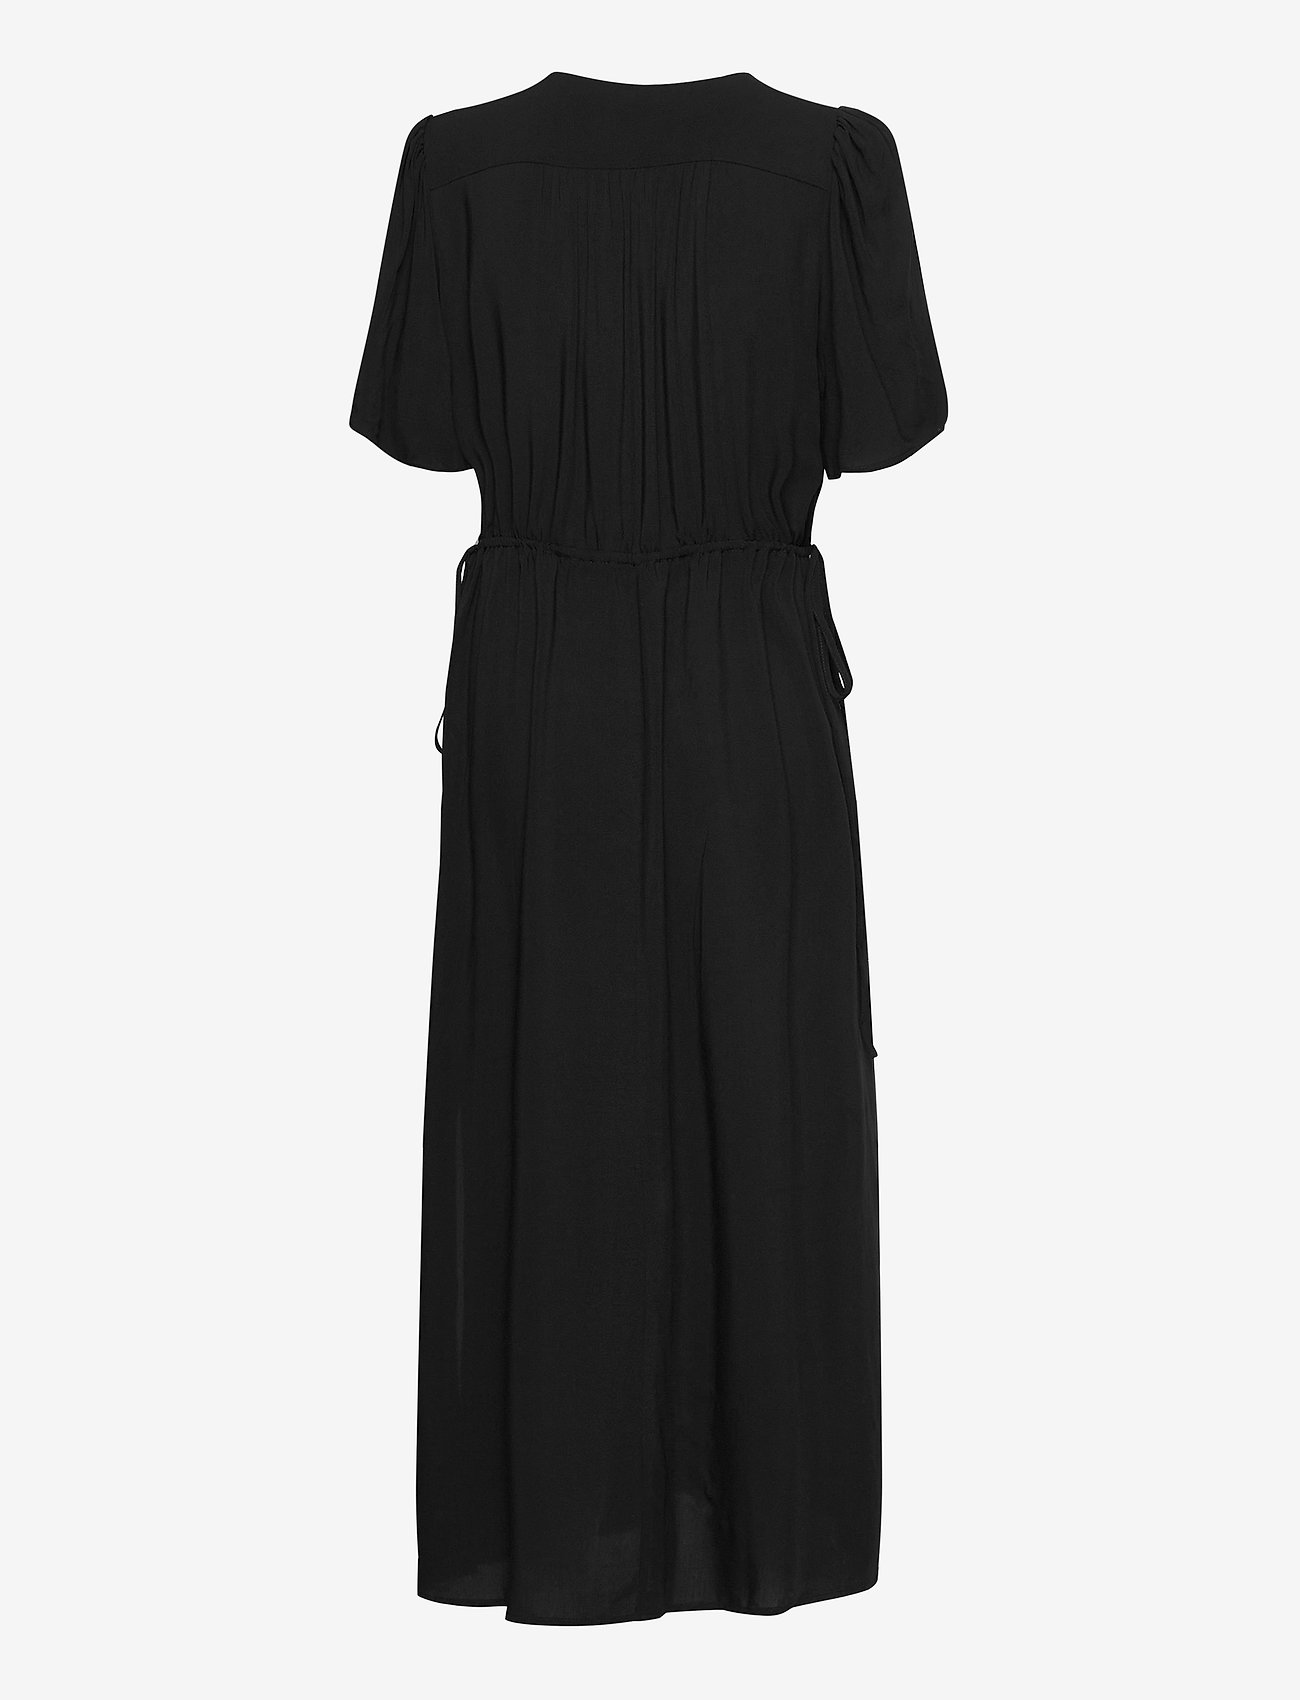 Slfwynona-damina 2/4 Ankle Slit Dress (Black) (58.49 €) - Selected ...